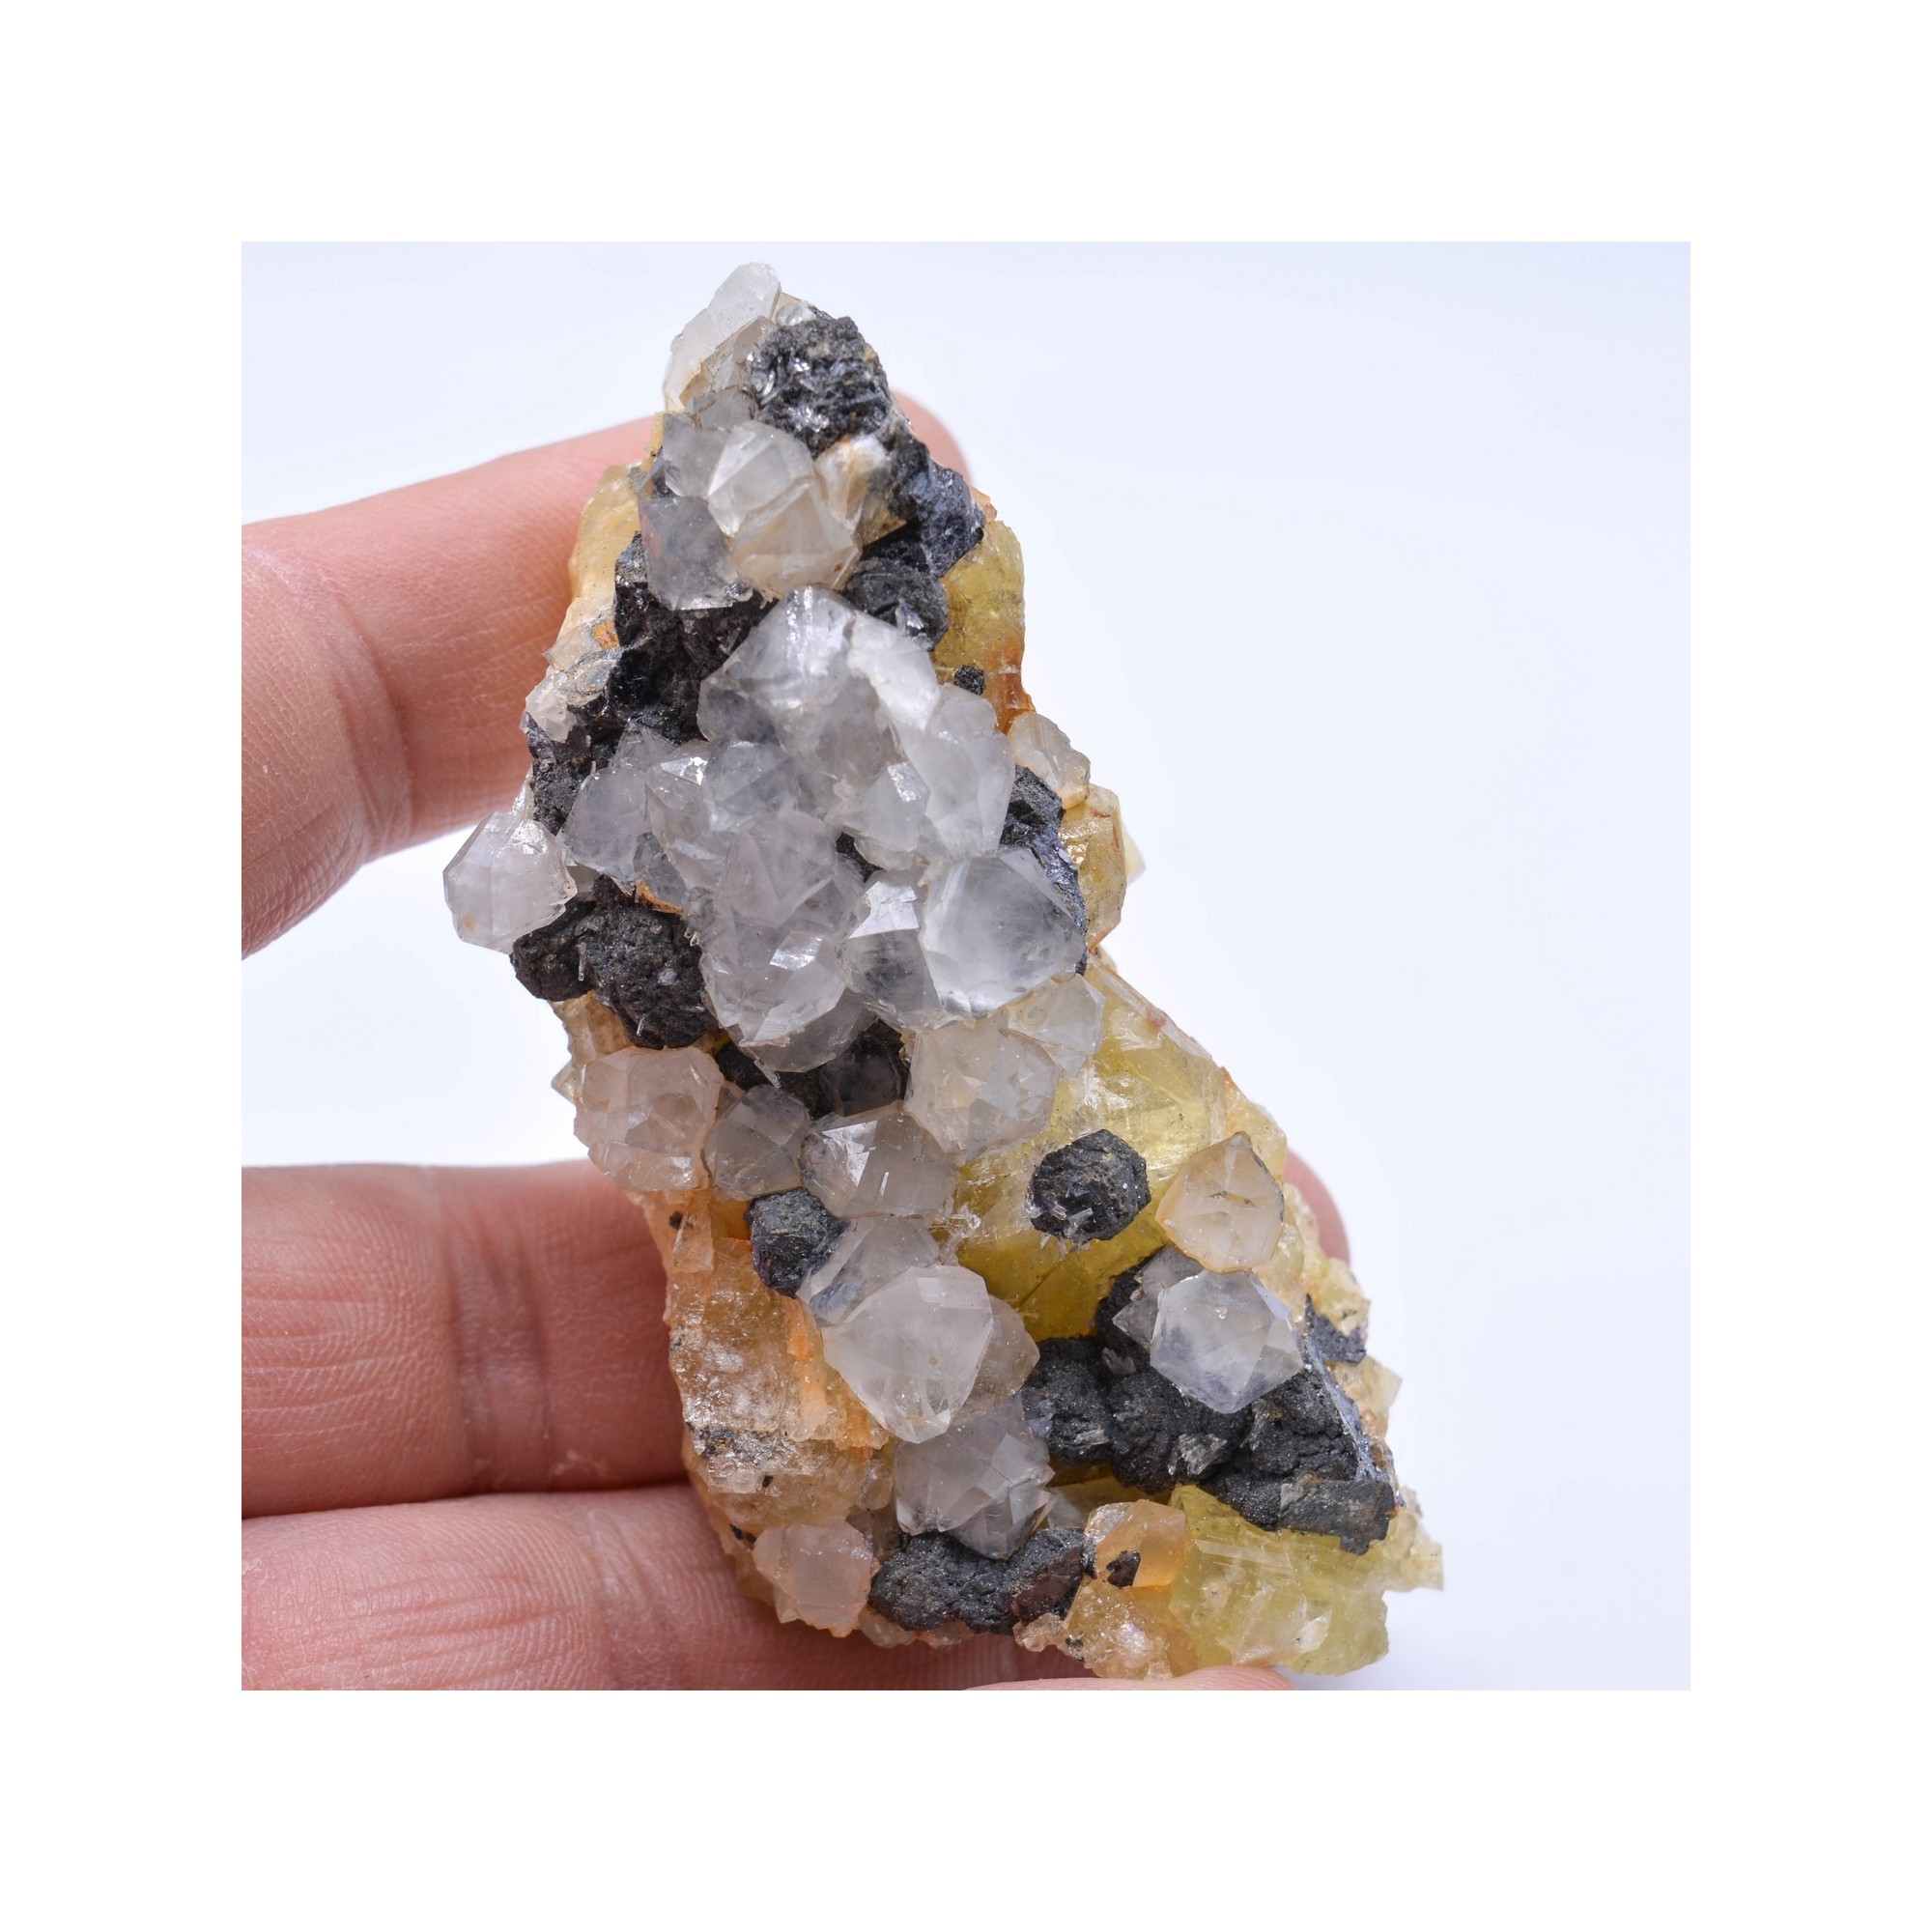 Fluorite, quartz, sphalerite - Peyrebrune, Tarn, France